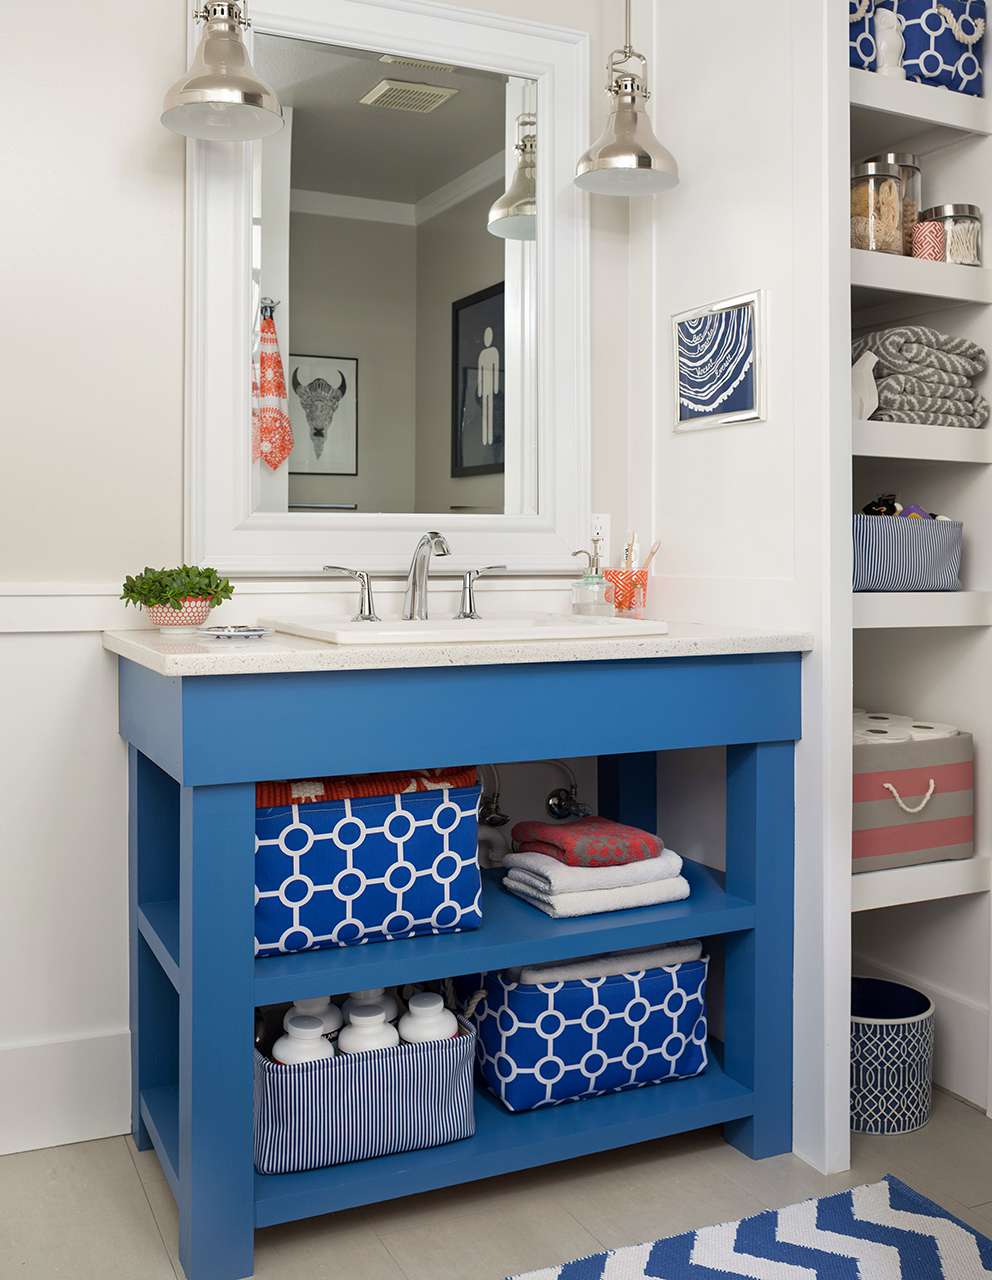 18 Diy Bathroom Vanity Ideas For Custom, Bathroom Vanity Cabinet Design